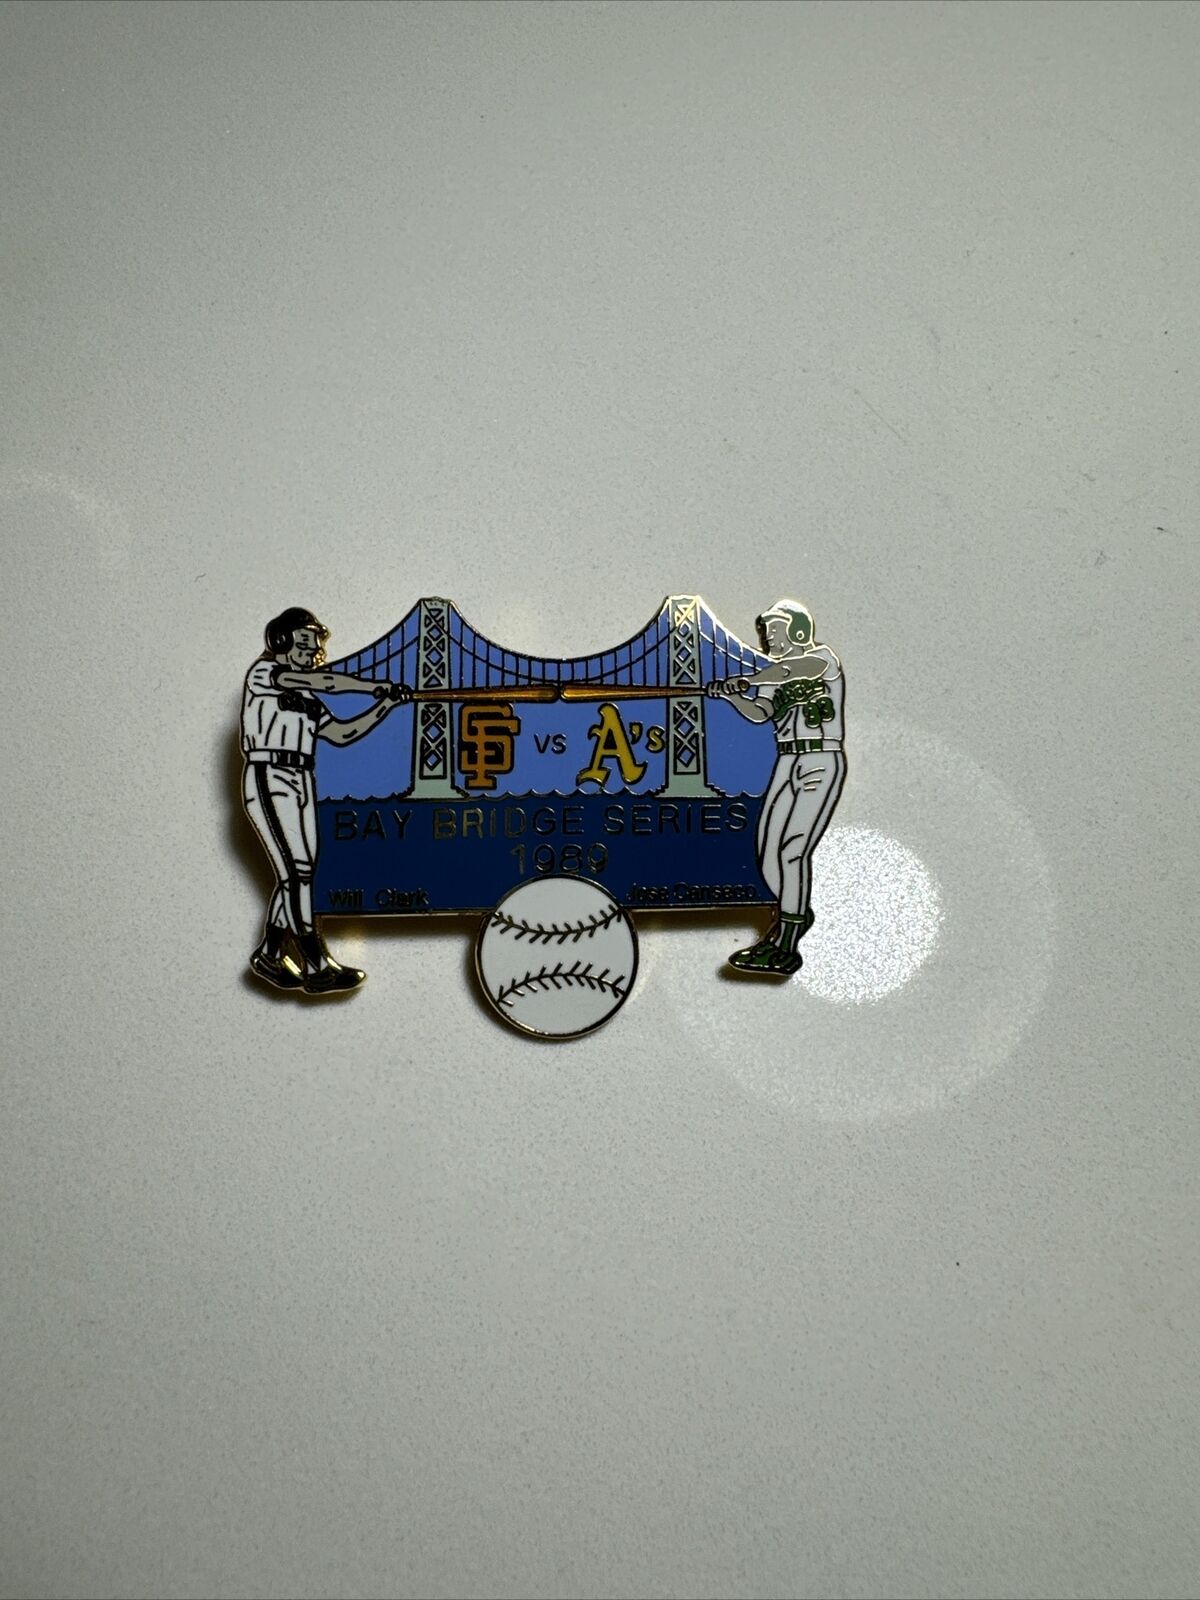 1989 MLB Bay Bridge Series Pin Will Clark Jose Canseco